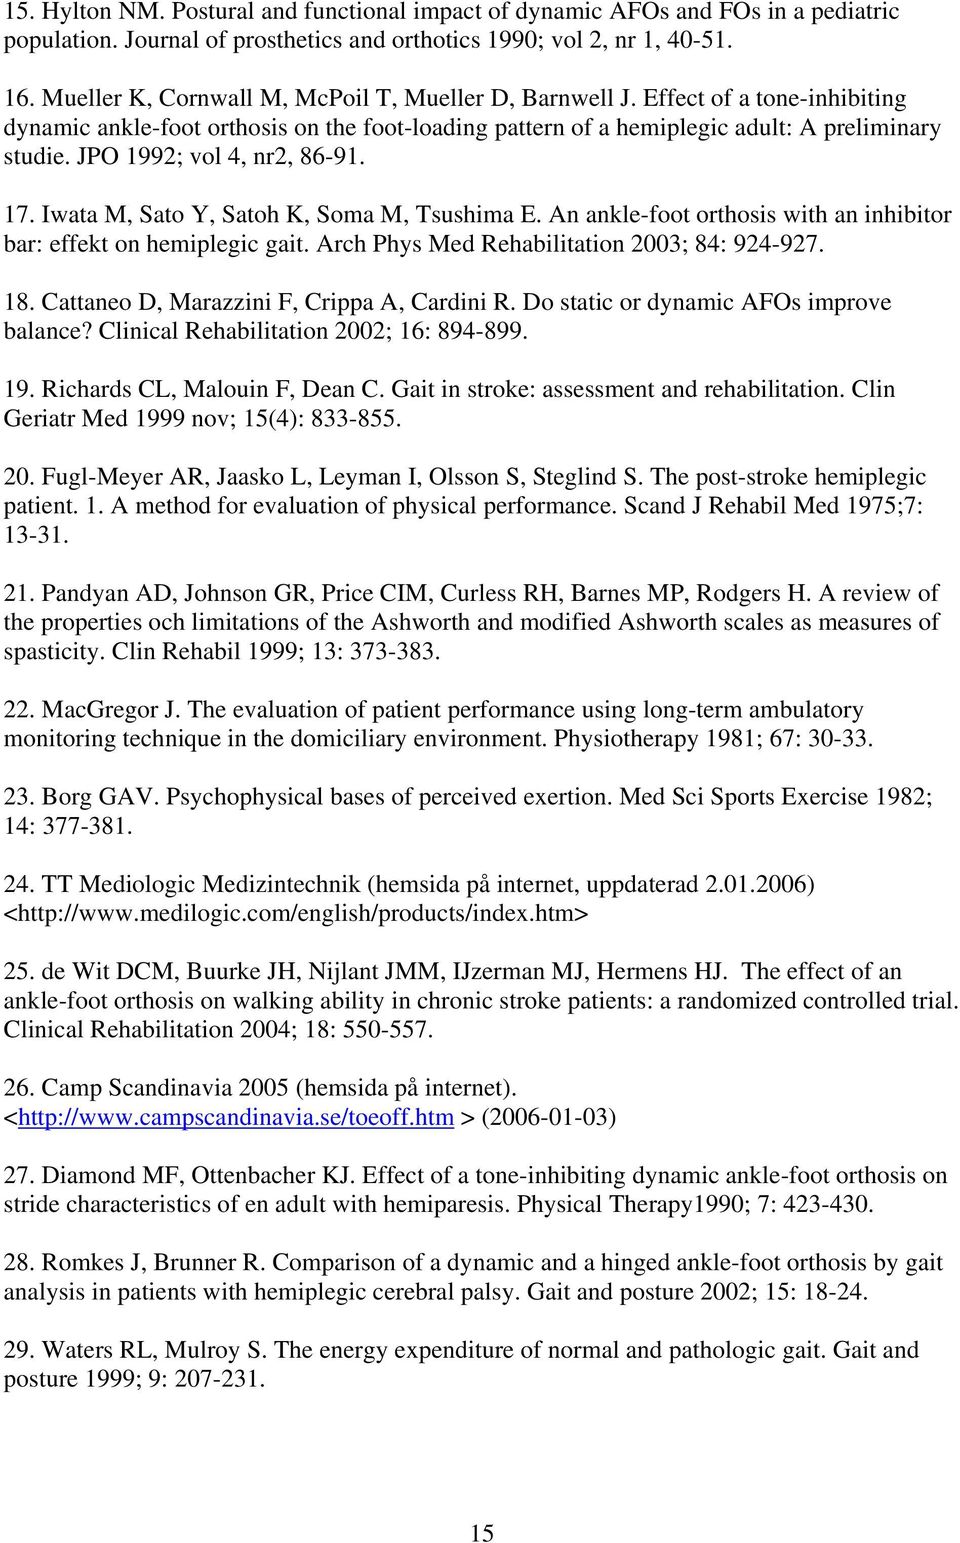 JPO 1992; vol 4, nr2, 86-91. 17. Iwata M, Sato Y, Satoh K, Soma M, Tsushima E. An ankle-foot orthosis with an inhibitor bar: effekt on hemiplegic gait. Arch Phys Med Rehabilitation 2003; 84: 924-927.